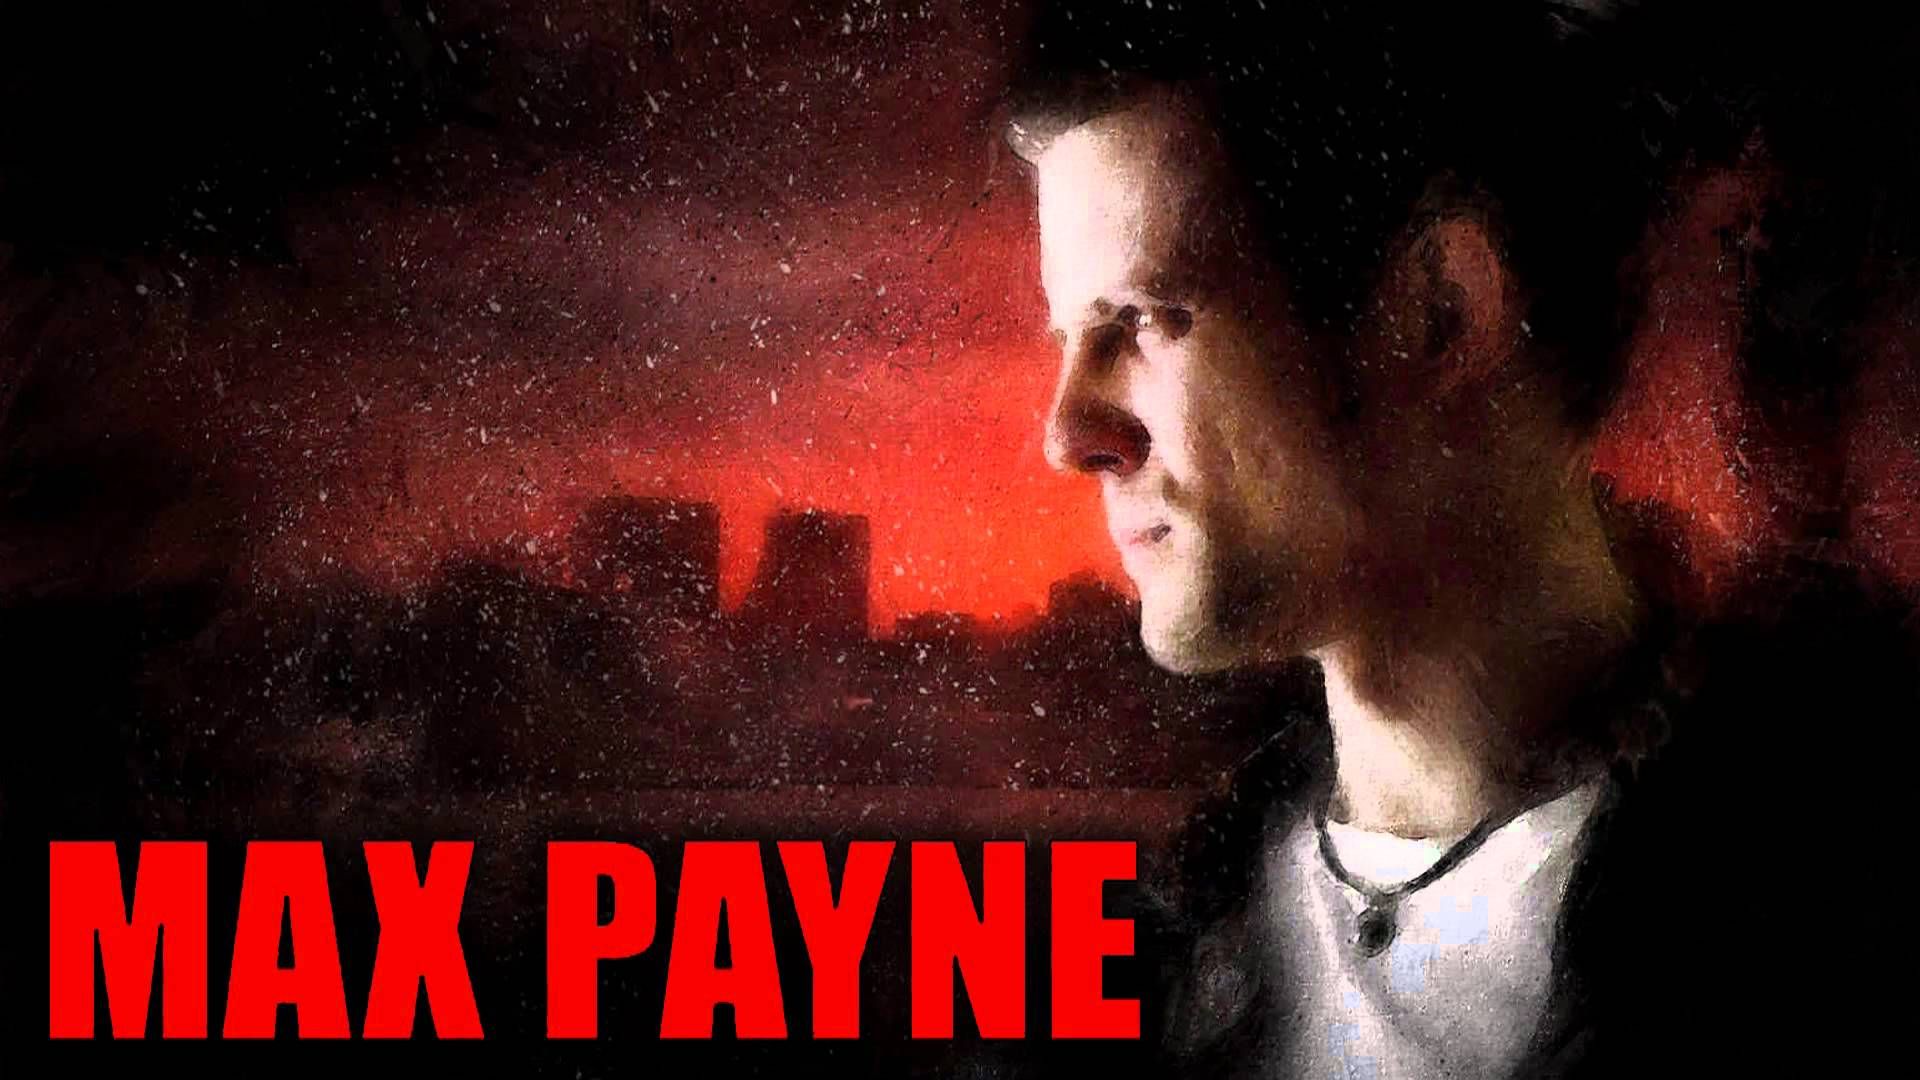 Макс играет 1. Max Payne 2001 Постер. Макс Пейн 1 обложка. Max Payne 1 игра. Max Payne 2001 игра Постер.